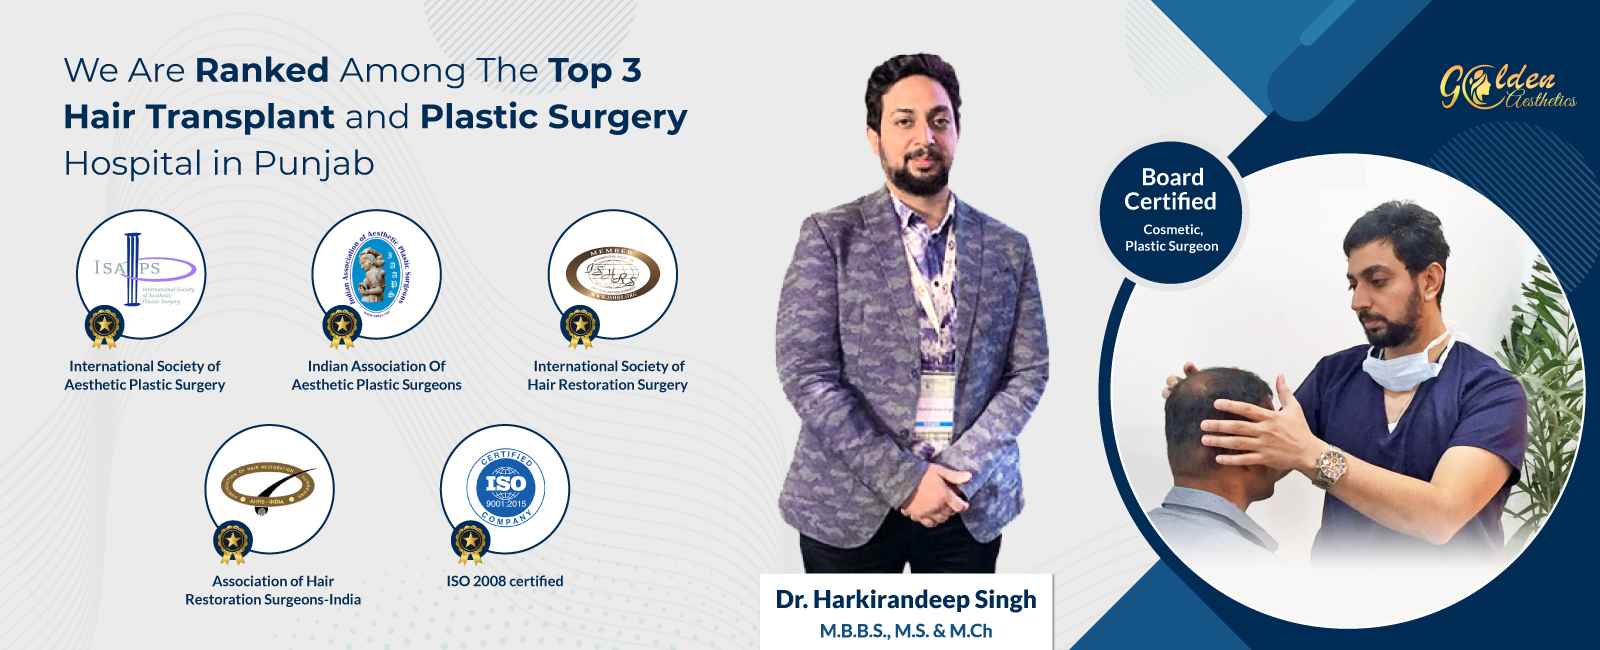 Best Hair Transplant clinic in Amritsar - Golden Aesthetics